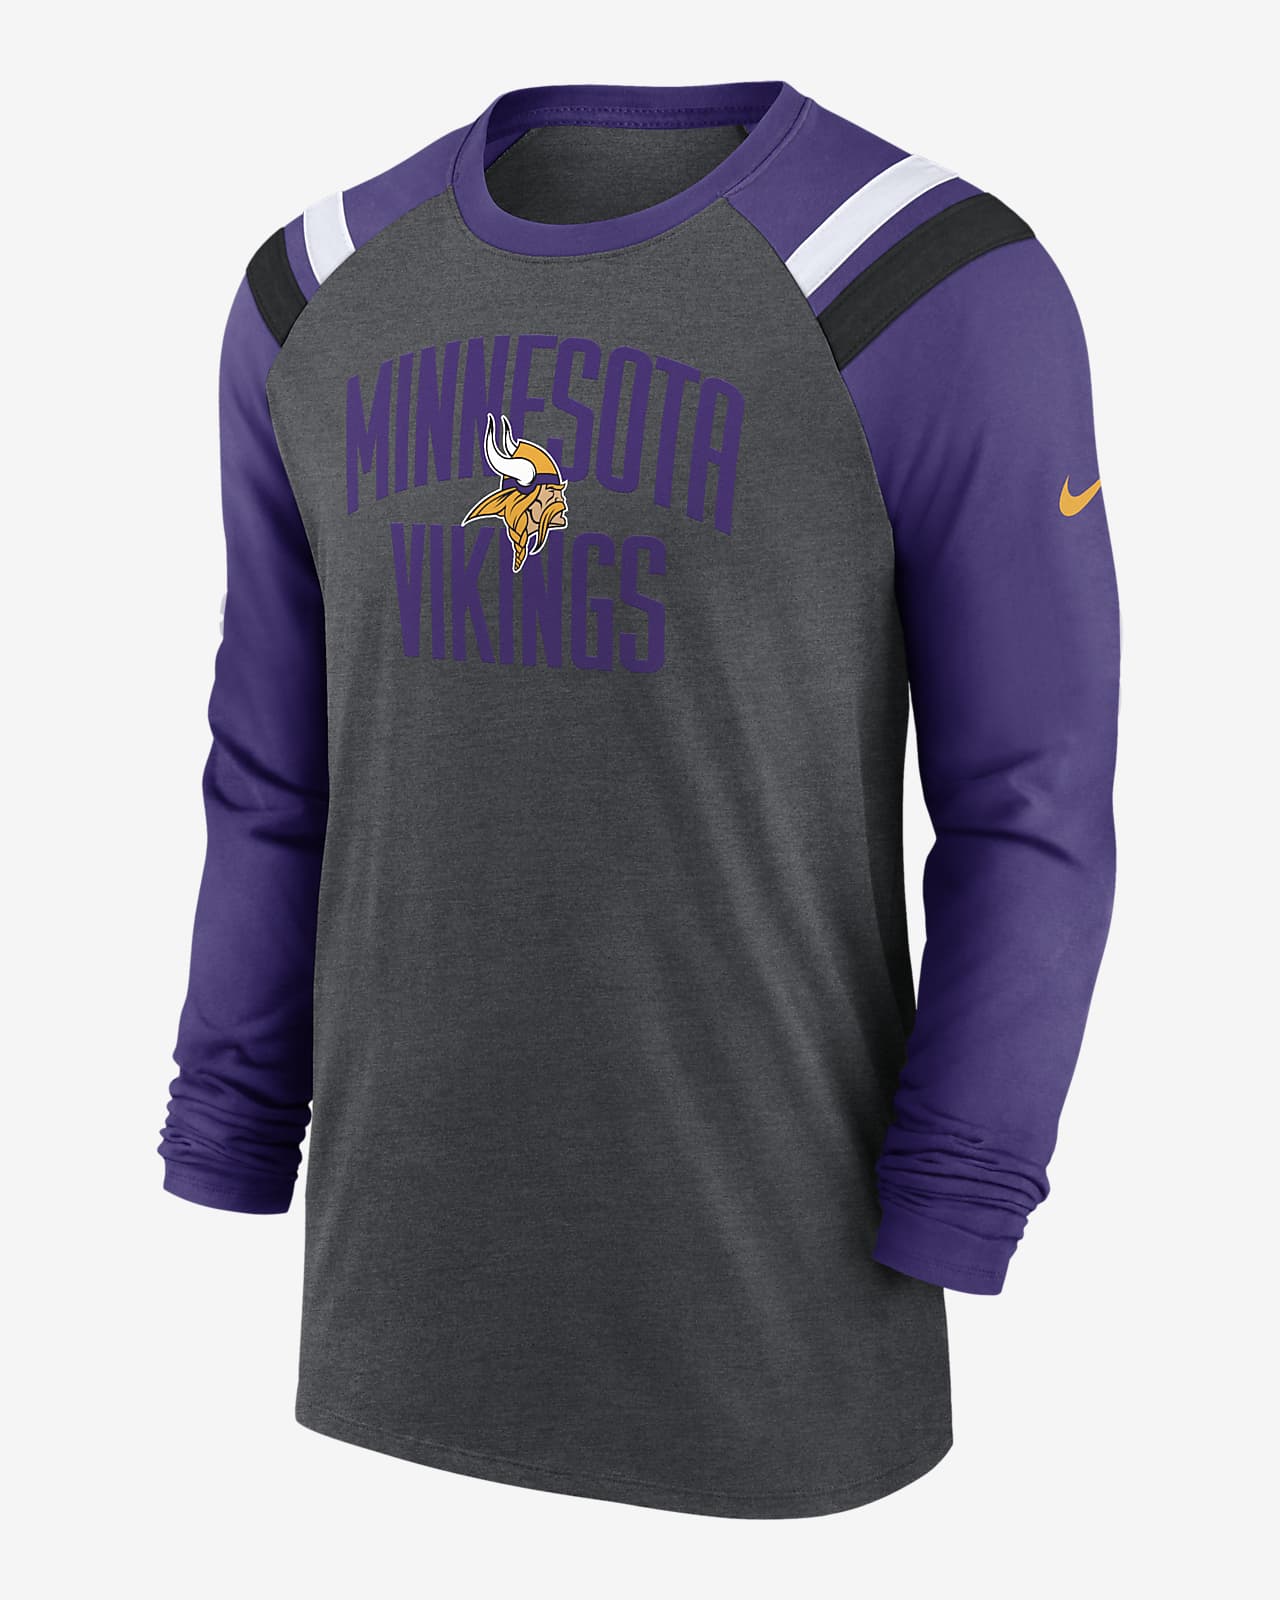 Men's Nike Heathered Charcoal/Purple Minnesota Vikings Tri-Blend Raglan Athletic Long Sleeve Fashion T-Shirt Size: Large